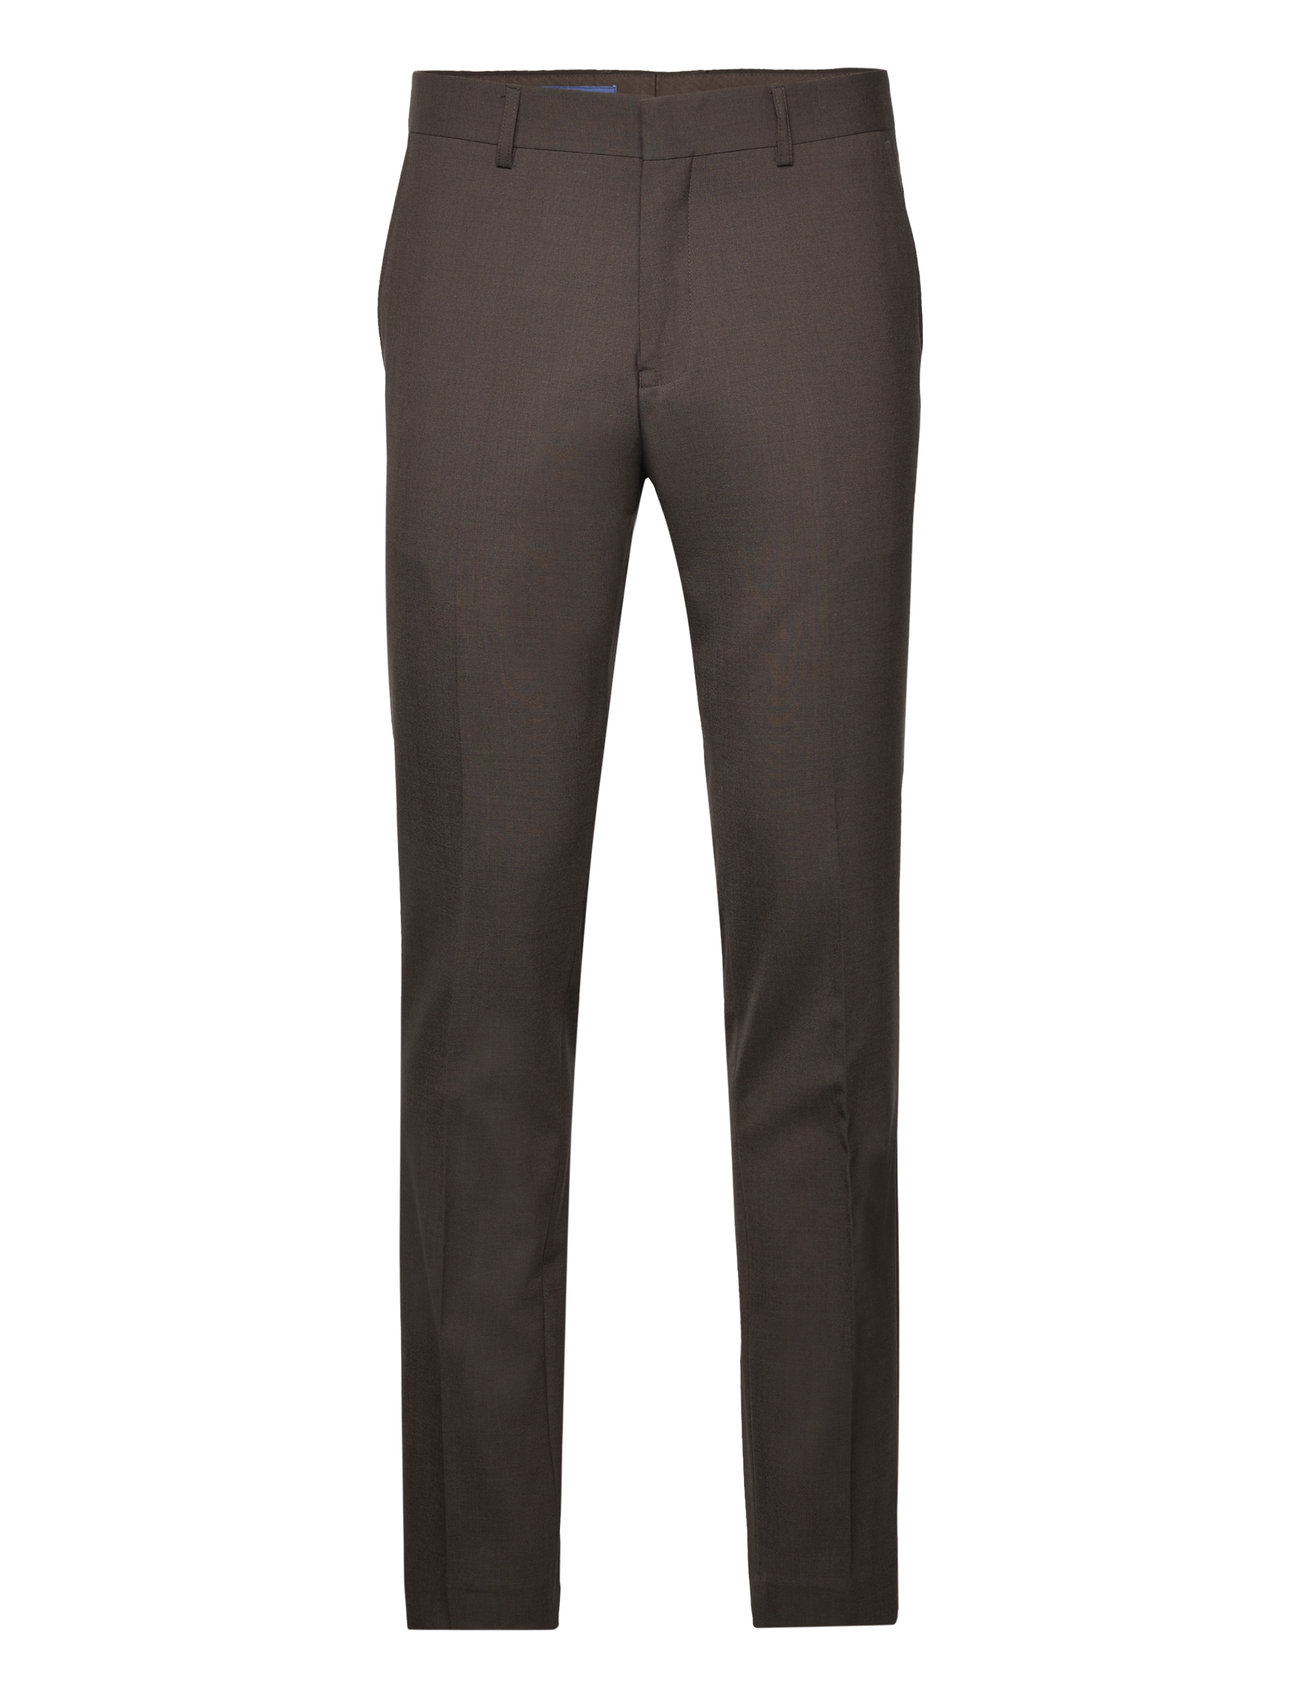 PANT MANIFESTO 2030 Sports trousers - Unisex - Diadora Online Store IN